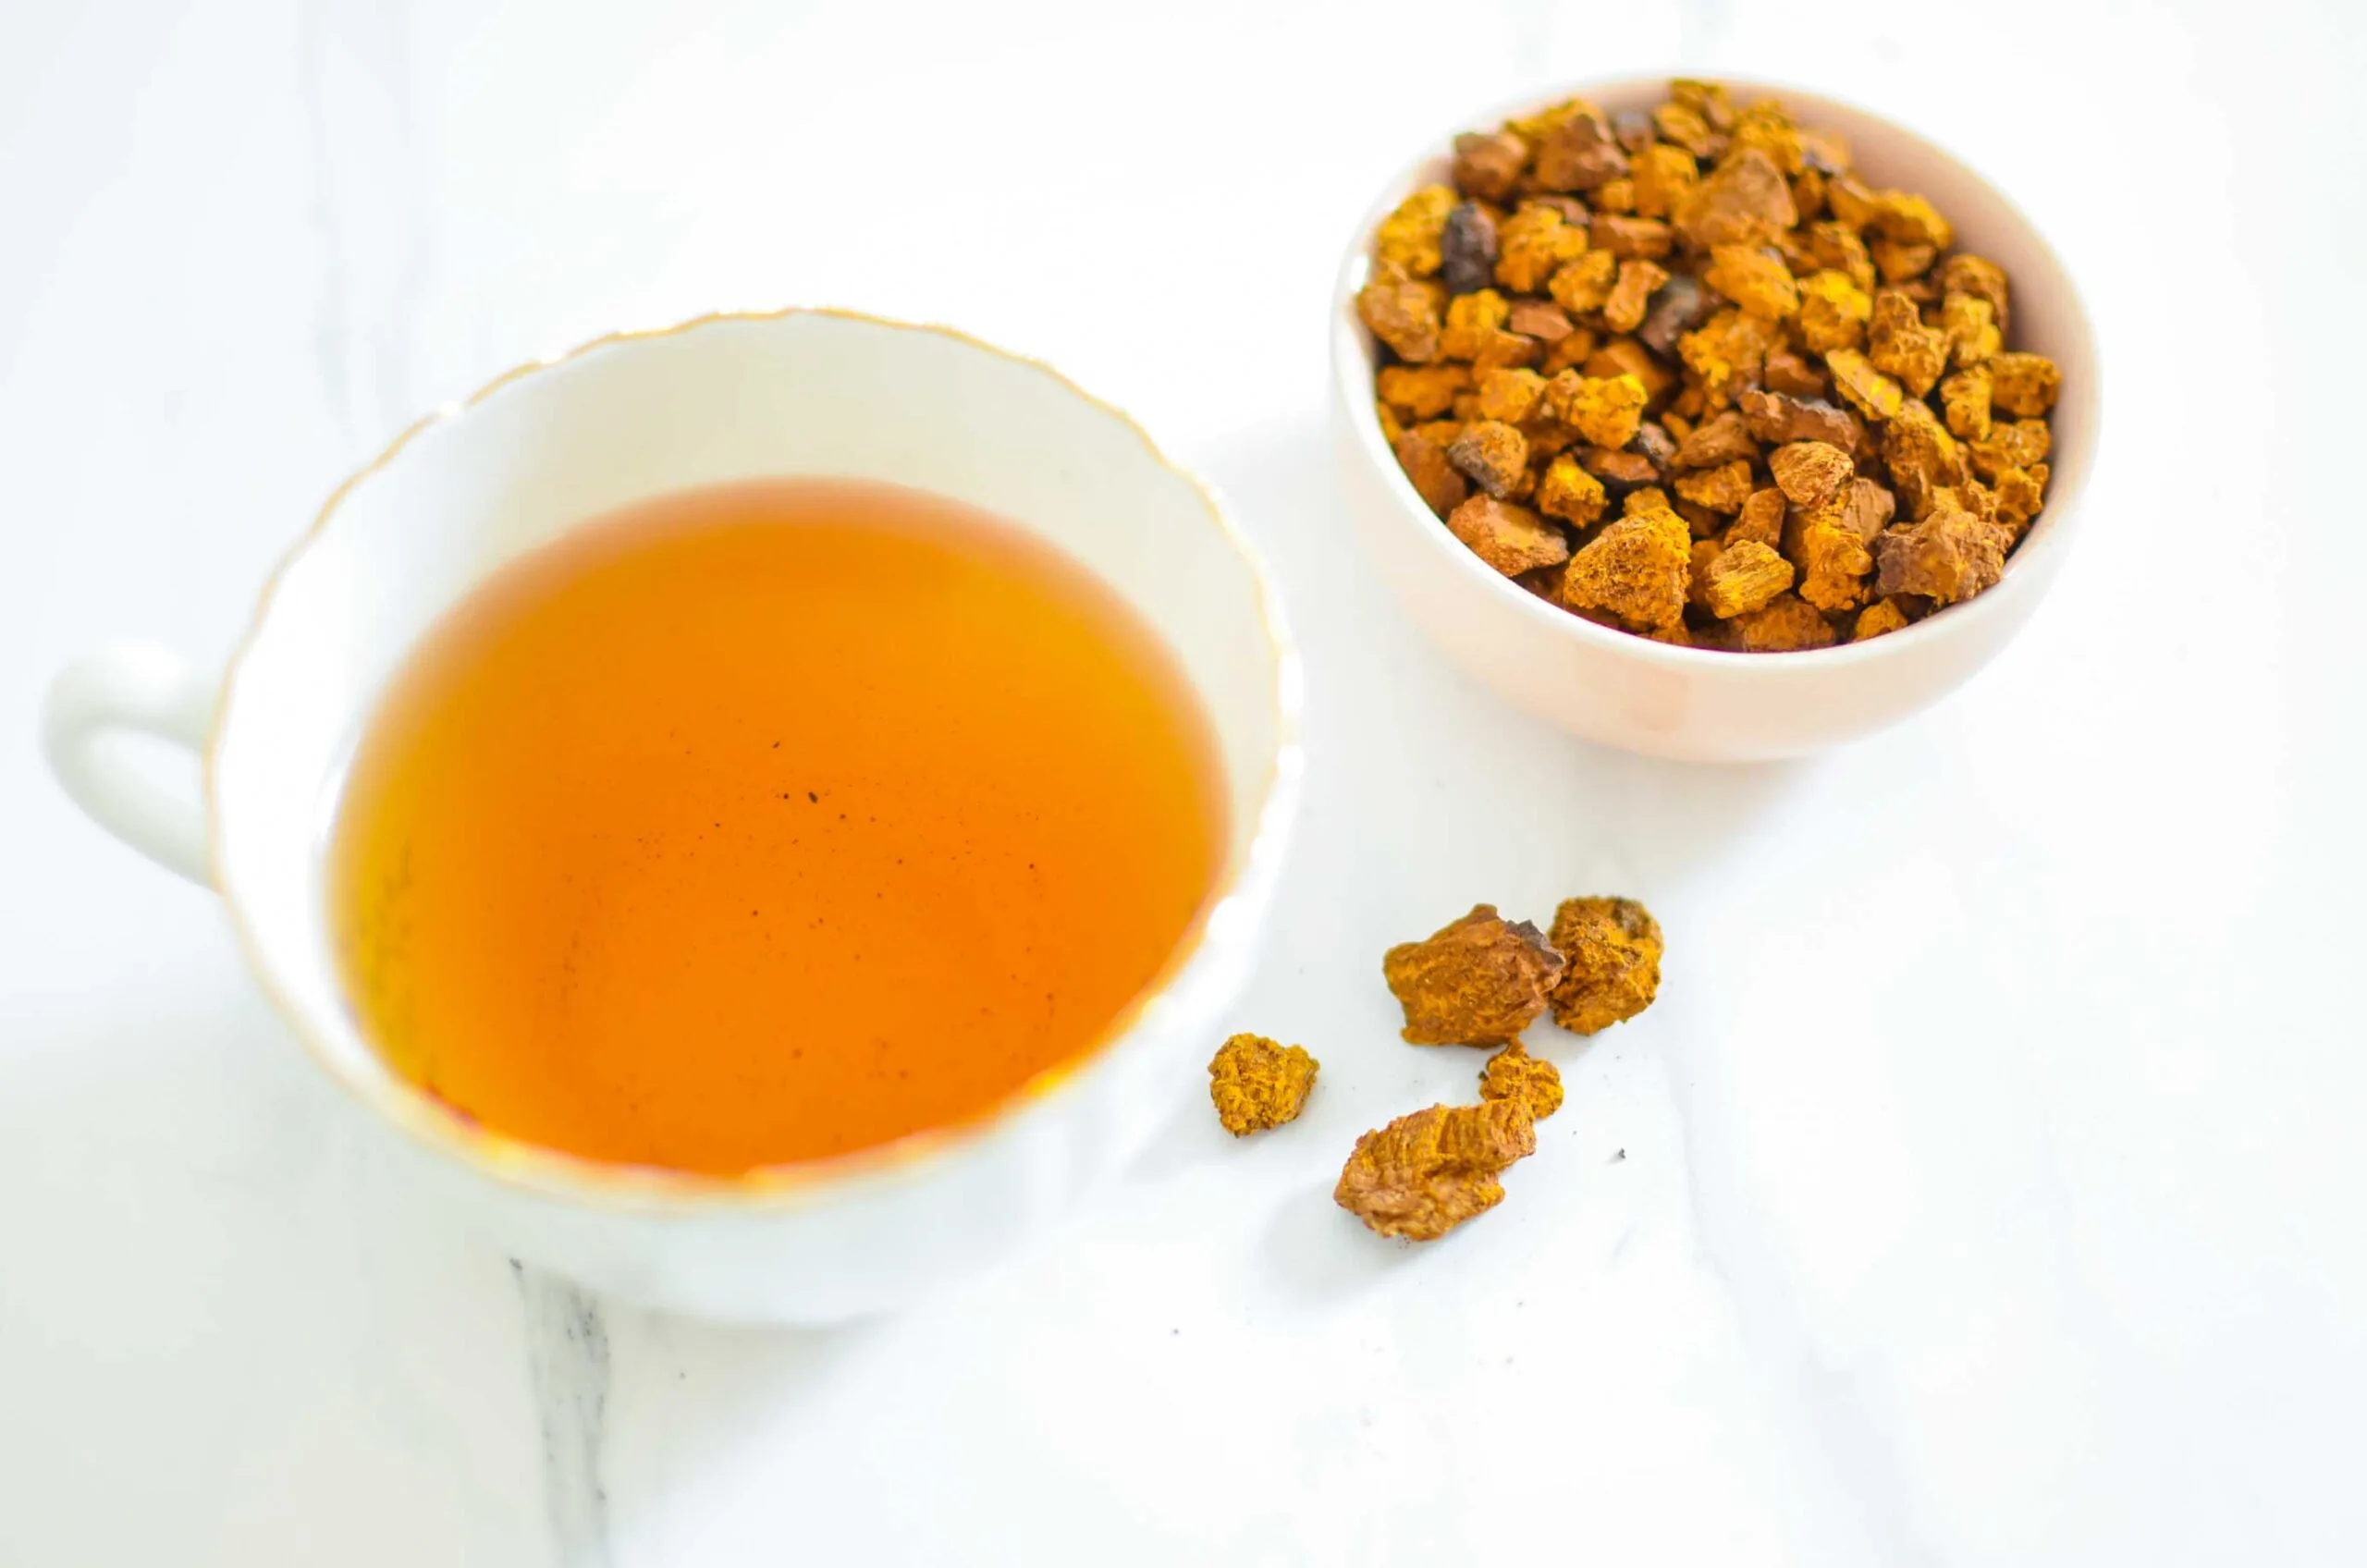 chaga-tea-unusual-herbal-teas